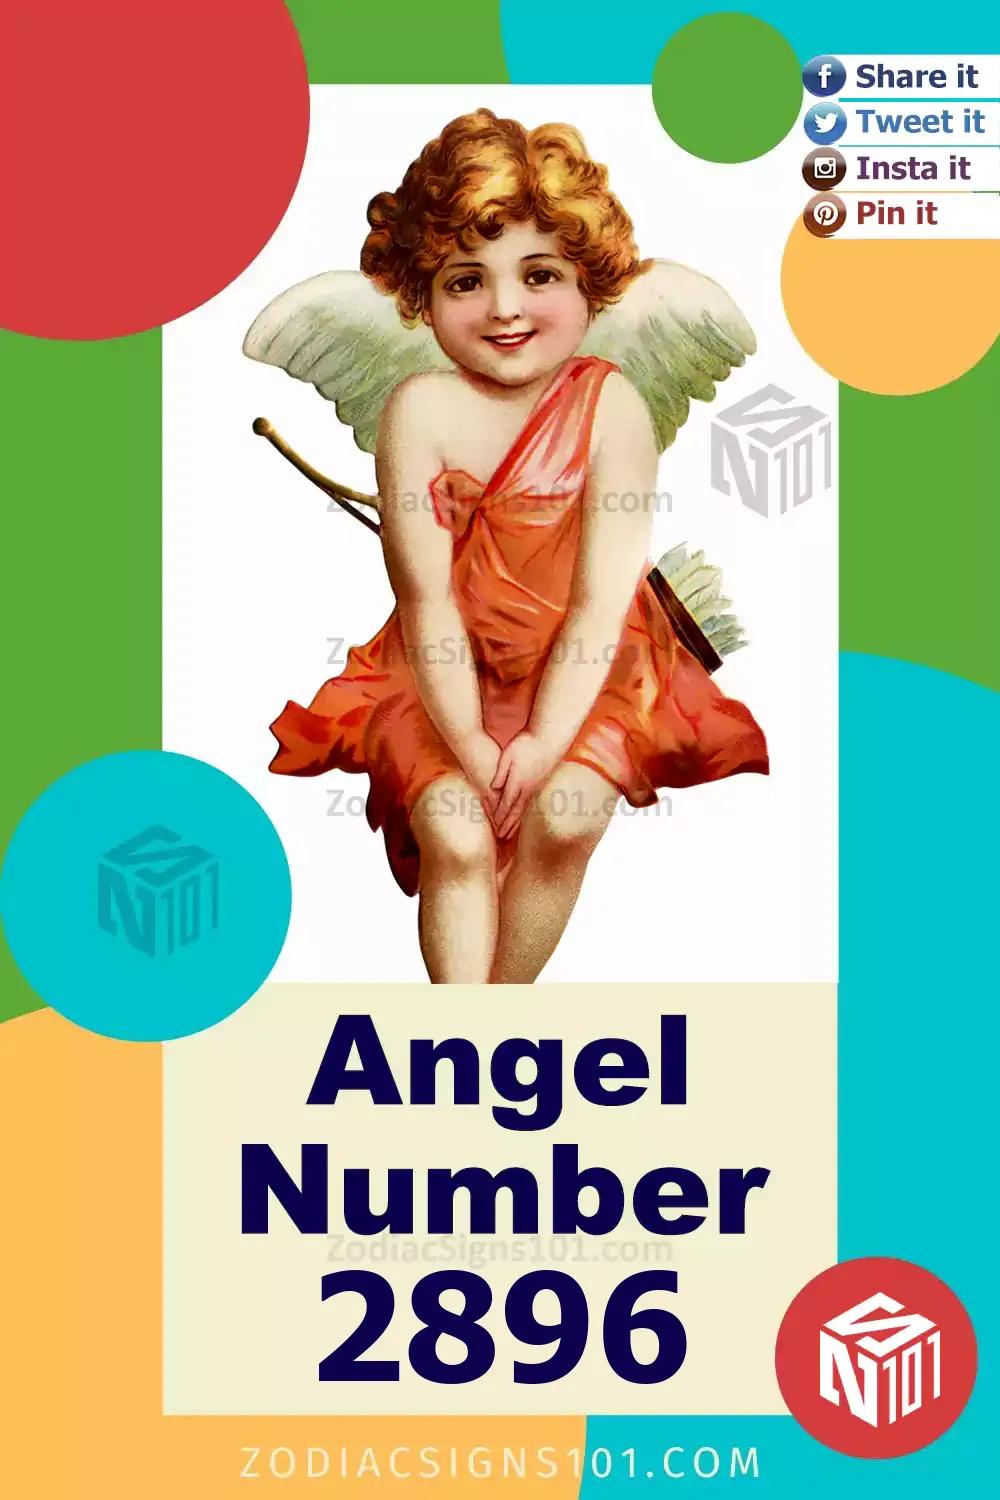 2896-Angel-Number-Meaning.jpg